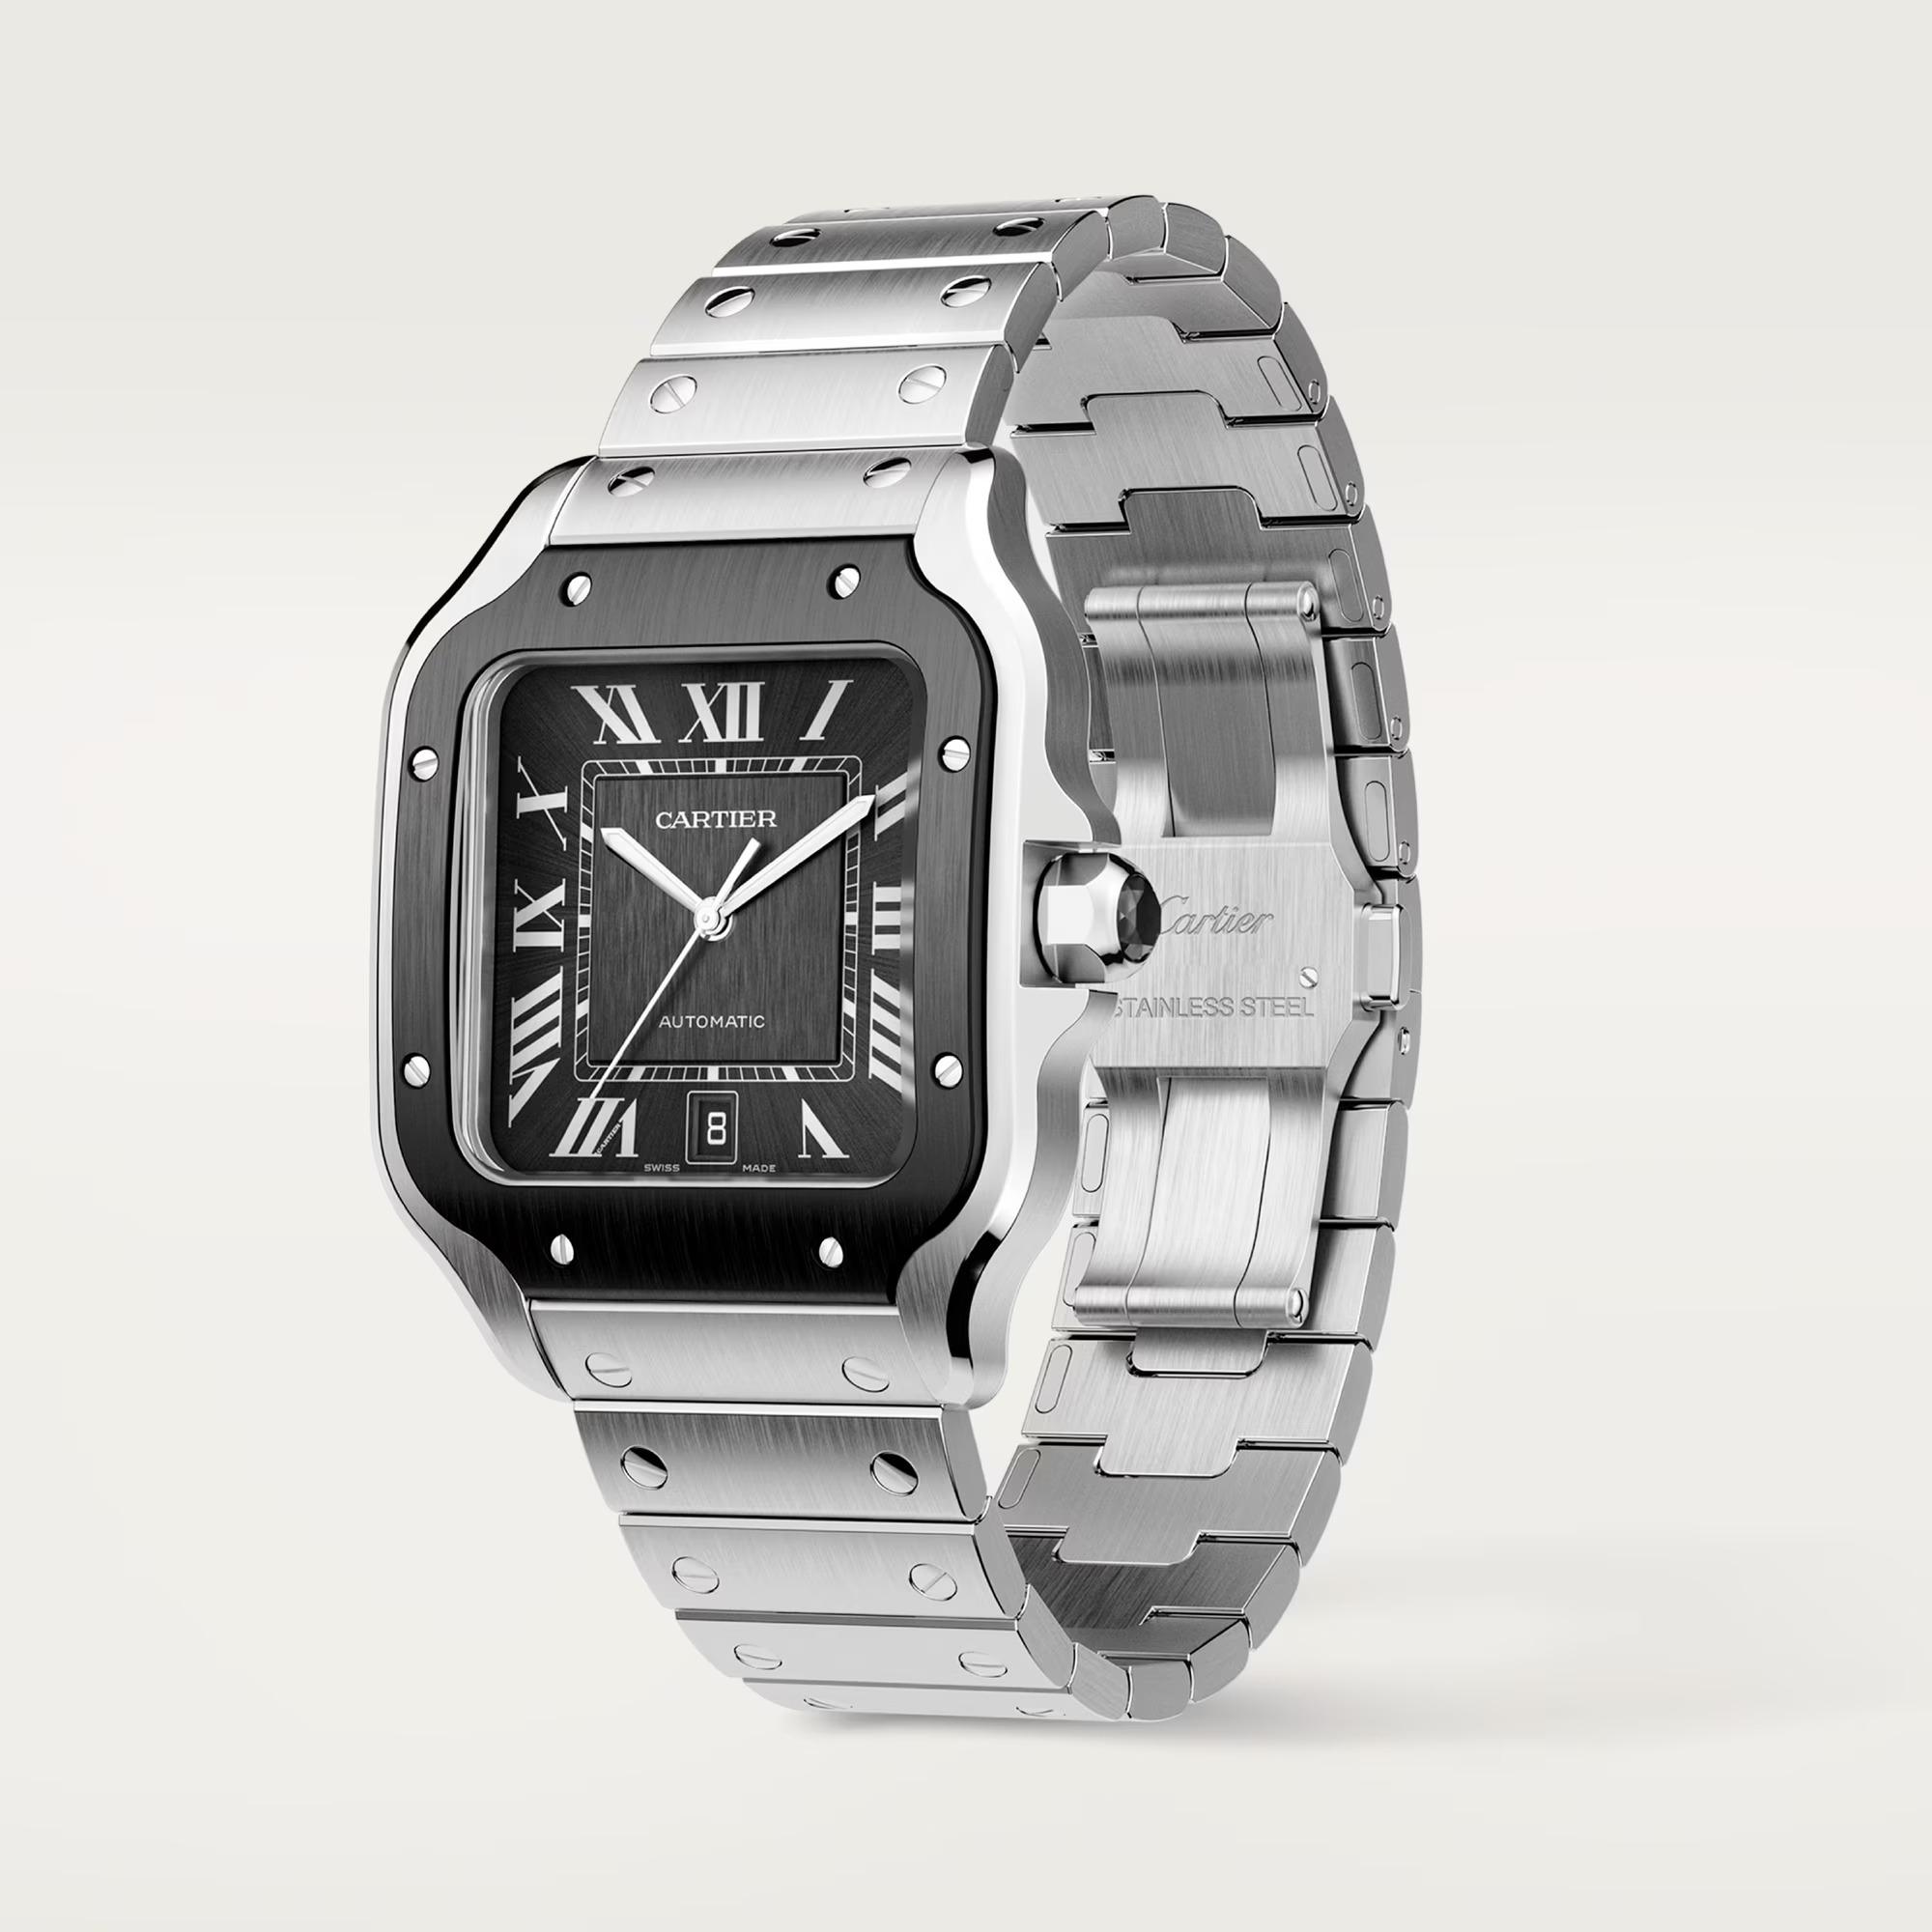 Santos de Cartier Watch with Gray Dial, large model 6